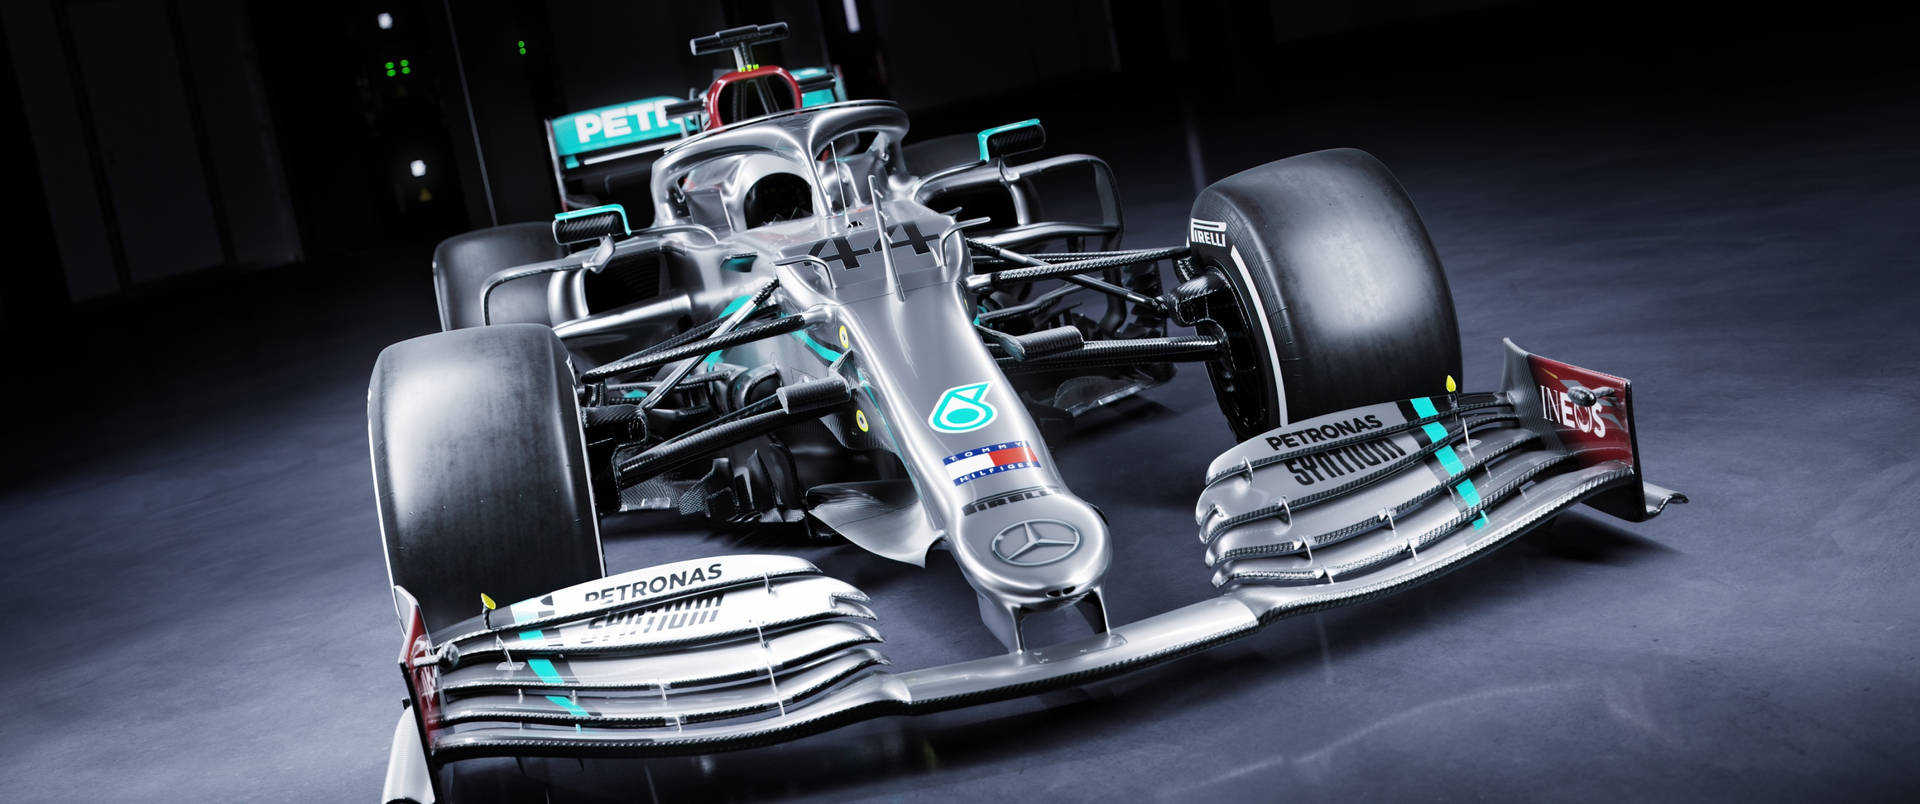 Elequipo De Carreras De Mercedes F1, Listo Para Tomar La Pista Fondo de pantalla